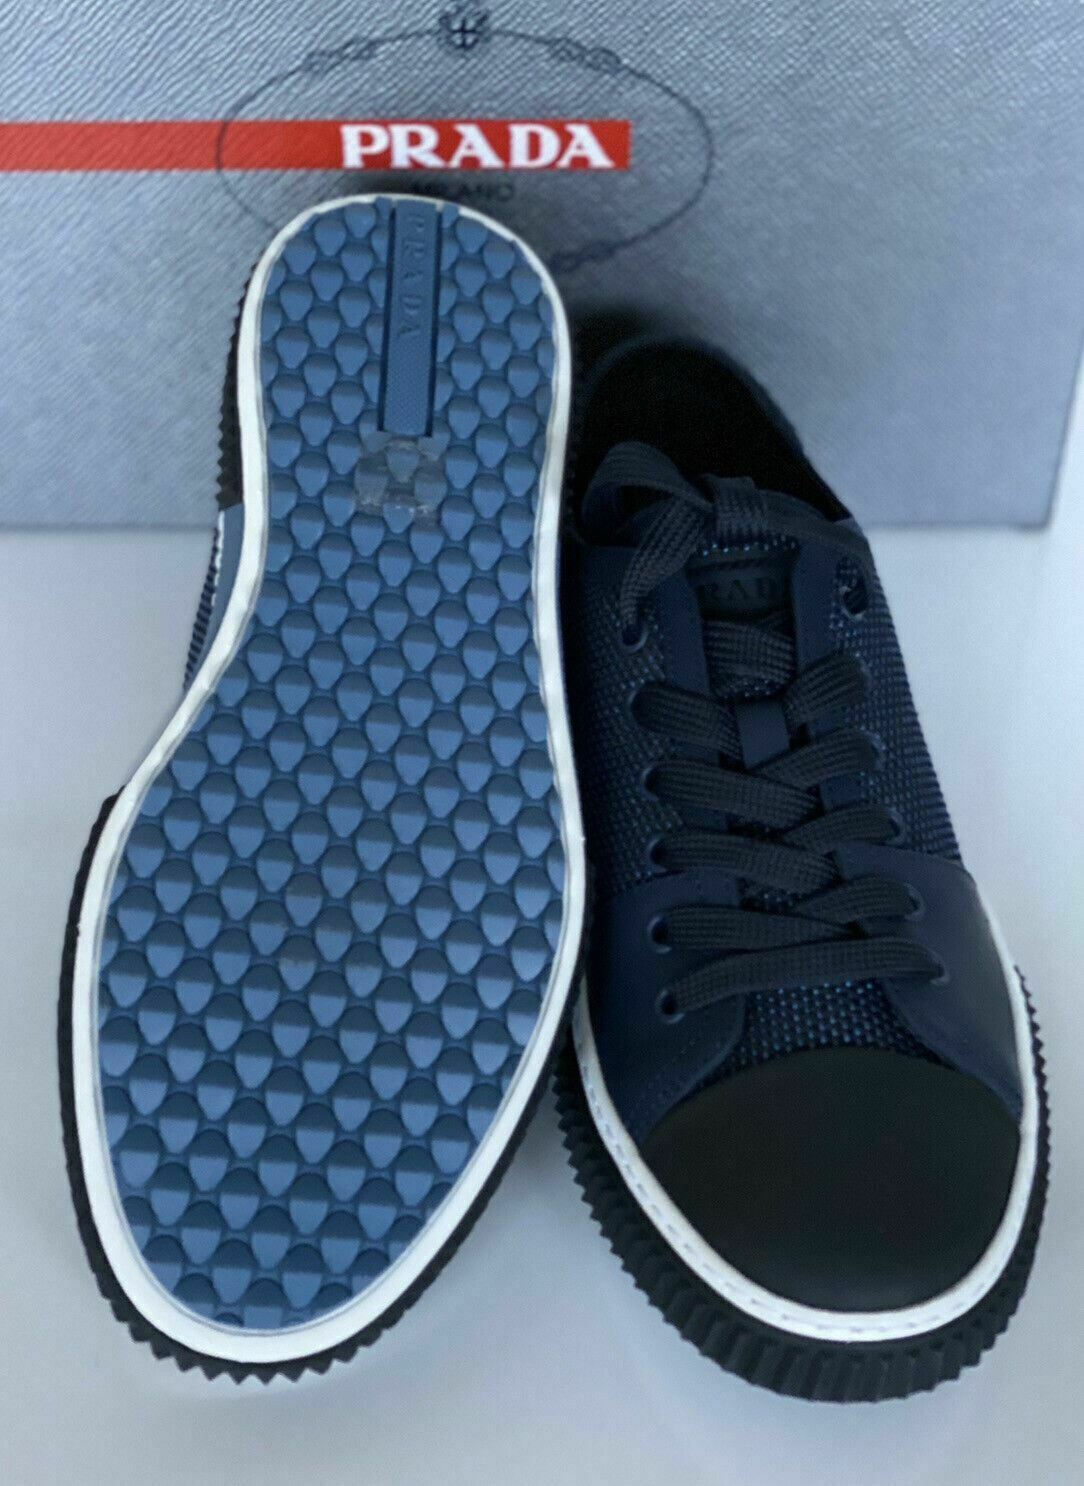 NIB PRADA Men's Blue Leather/Nylon Sneakers 8.5 US (Prada 7.5) 4E3058